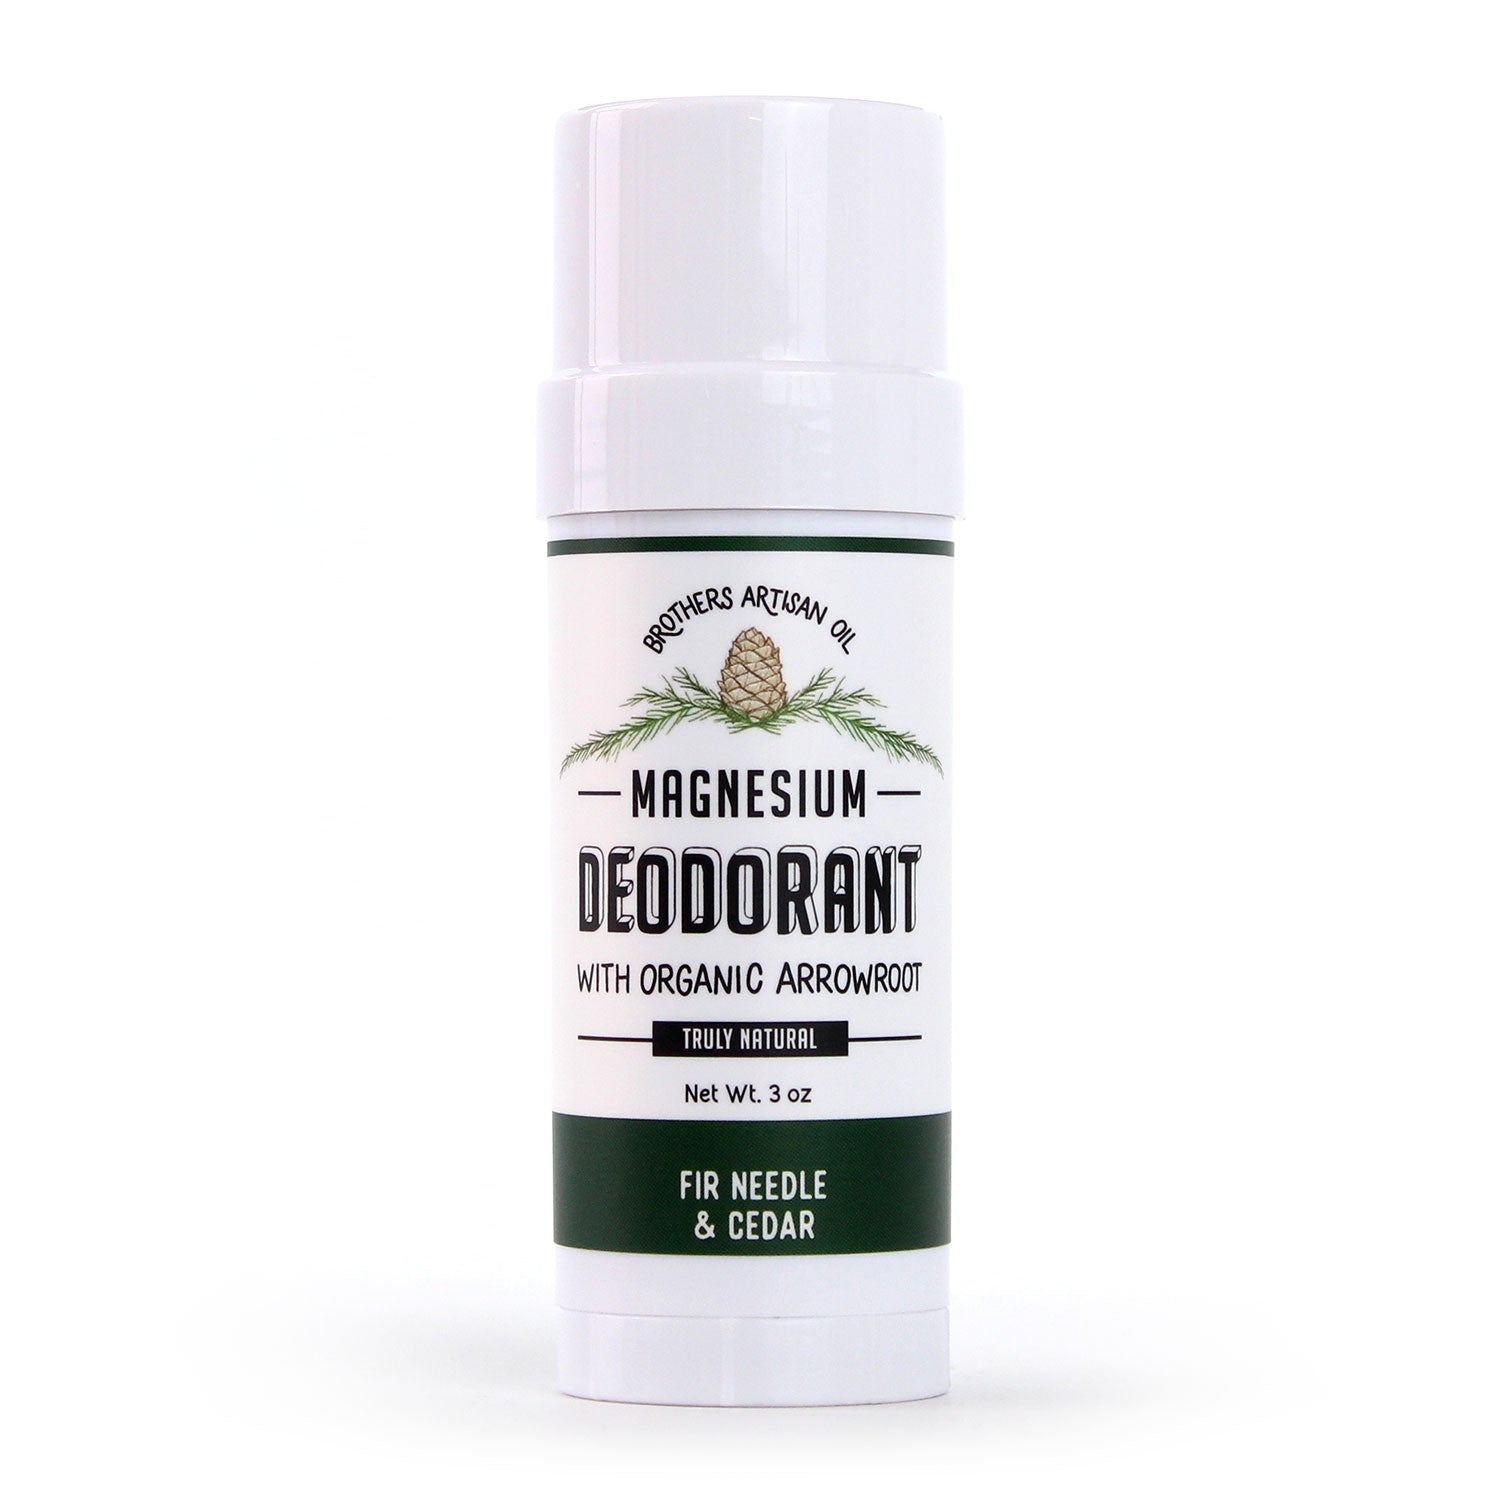 The Magnesium Deodorant: Fir Needle & Cedar